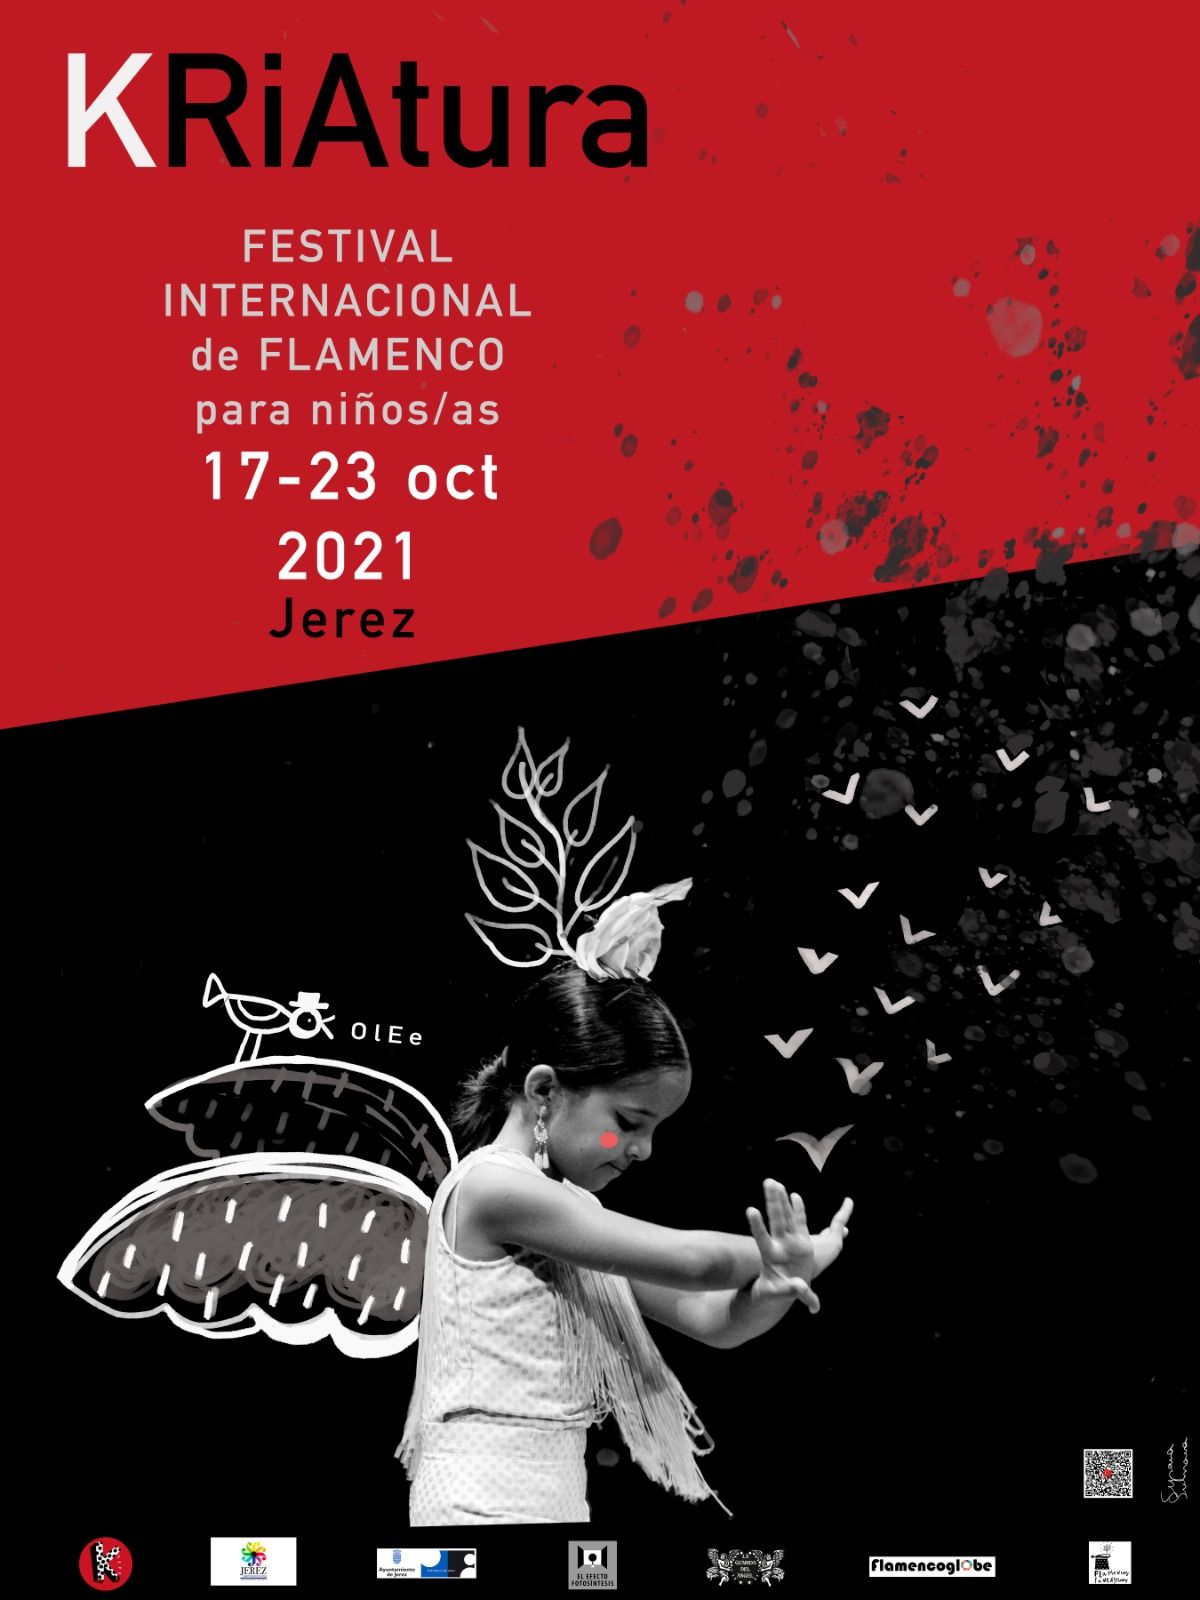 Cartel del festival Kriatura 2021.